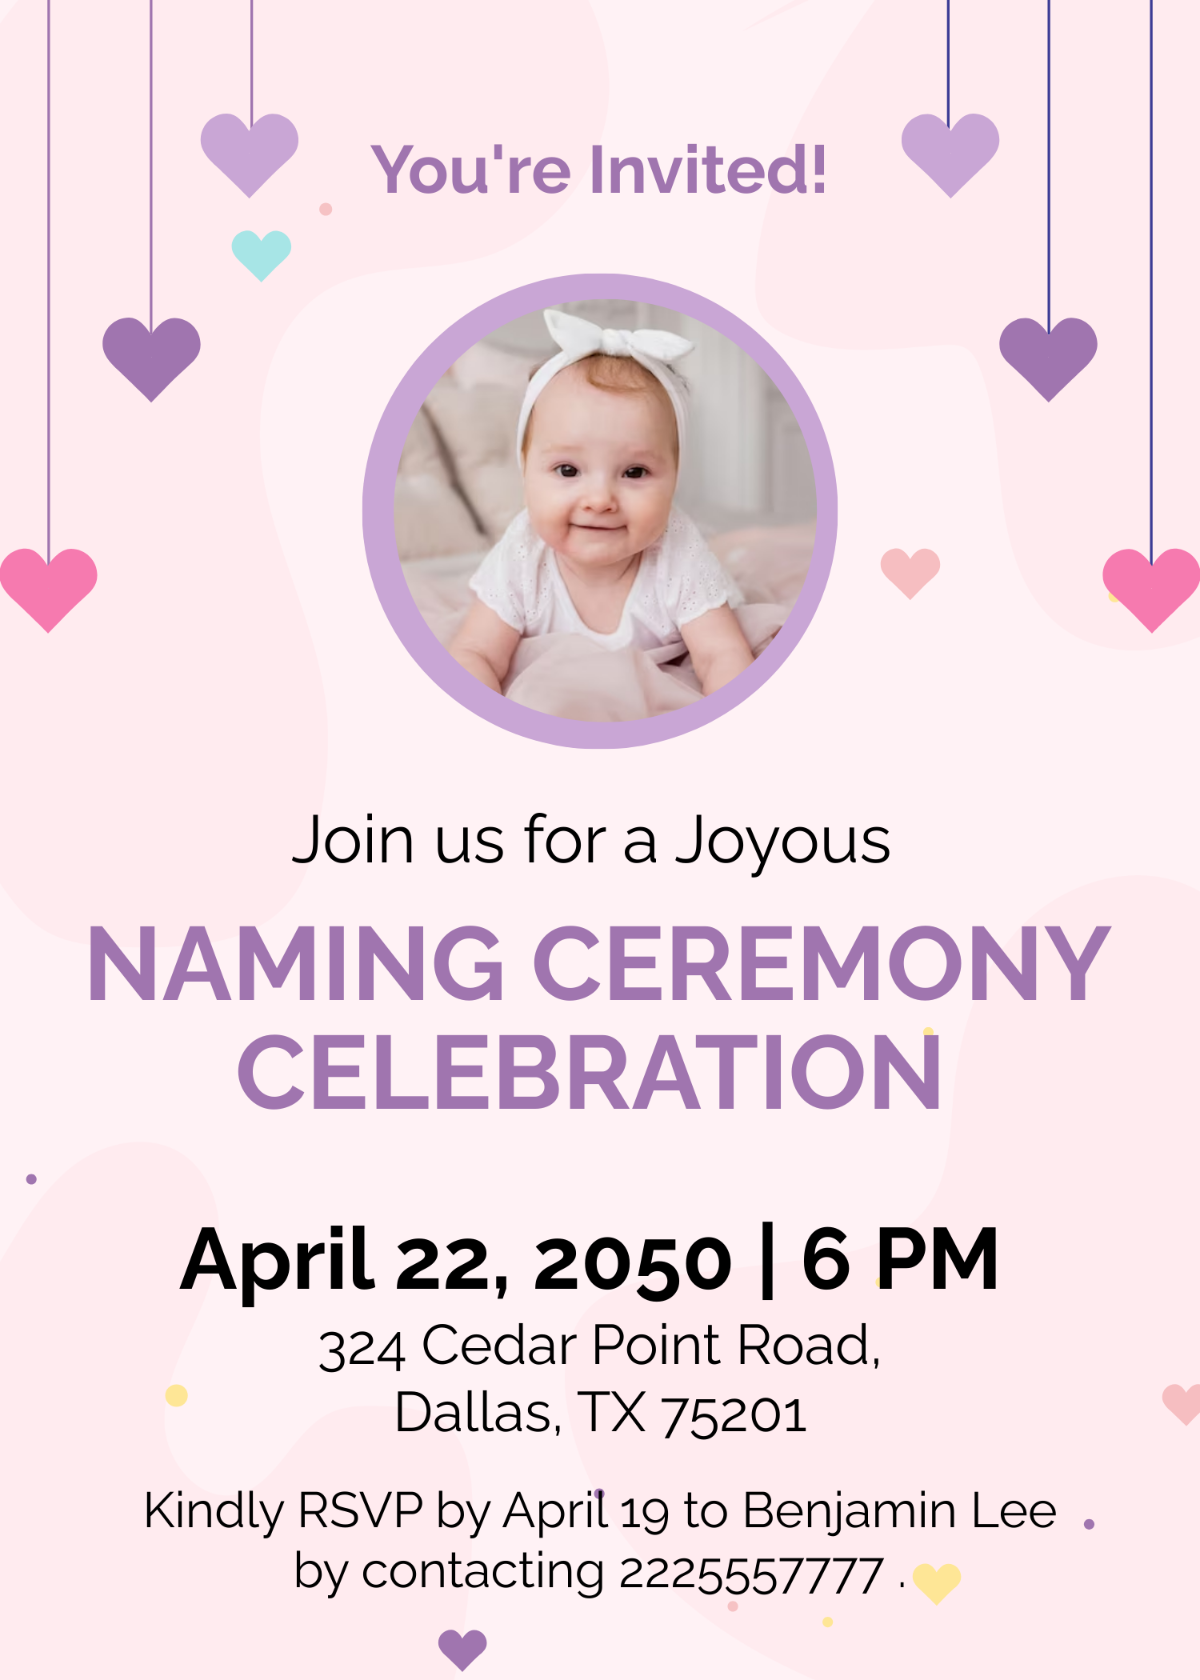 Naming ceremony invitation card for baby girl